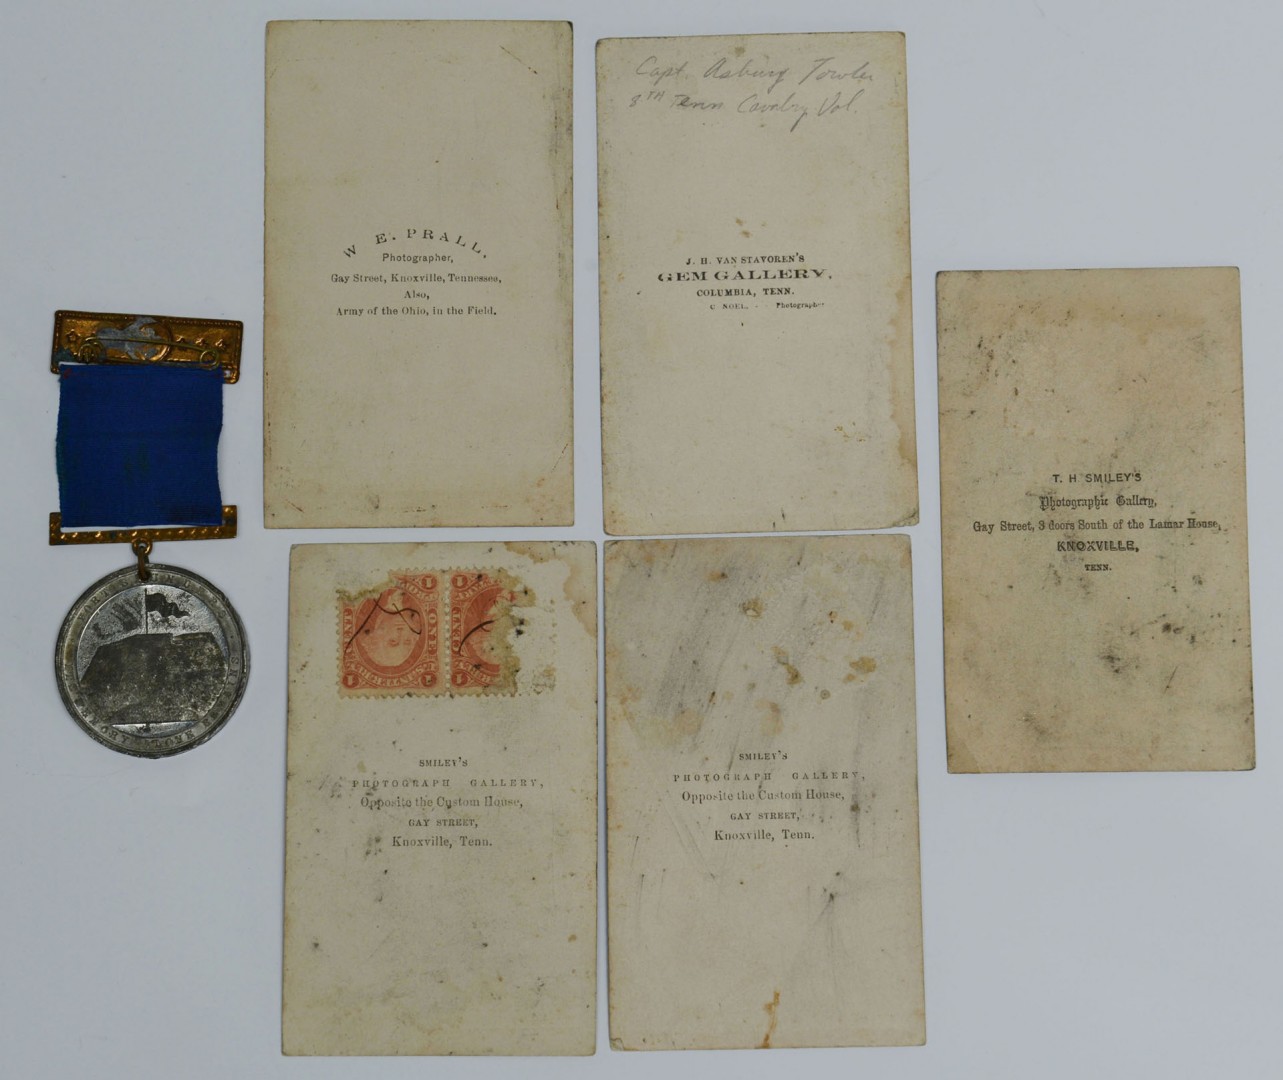 Lot 72: 5 TN Civil War Era CDV's and Fort Sanders Medal